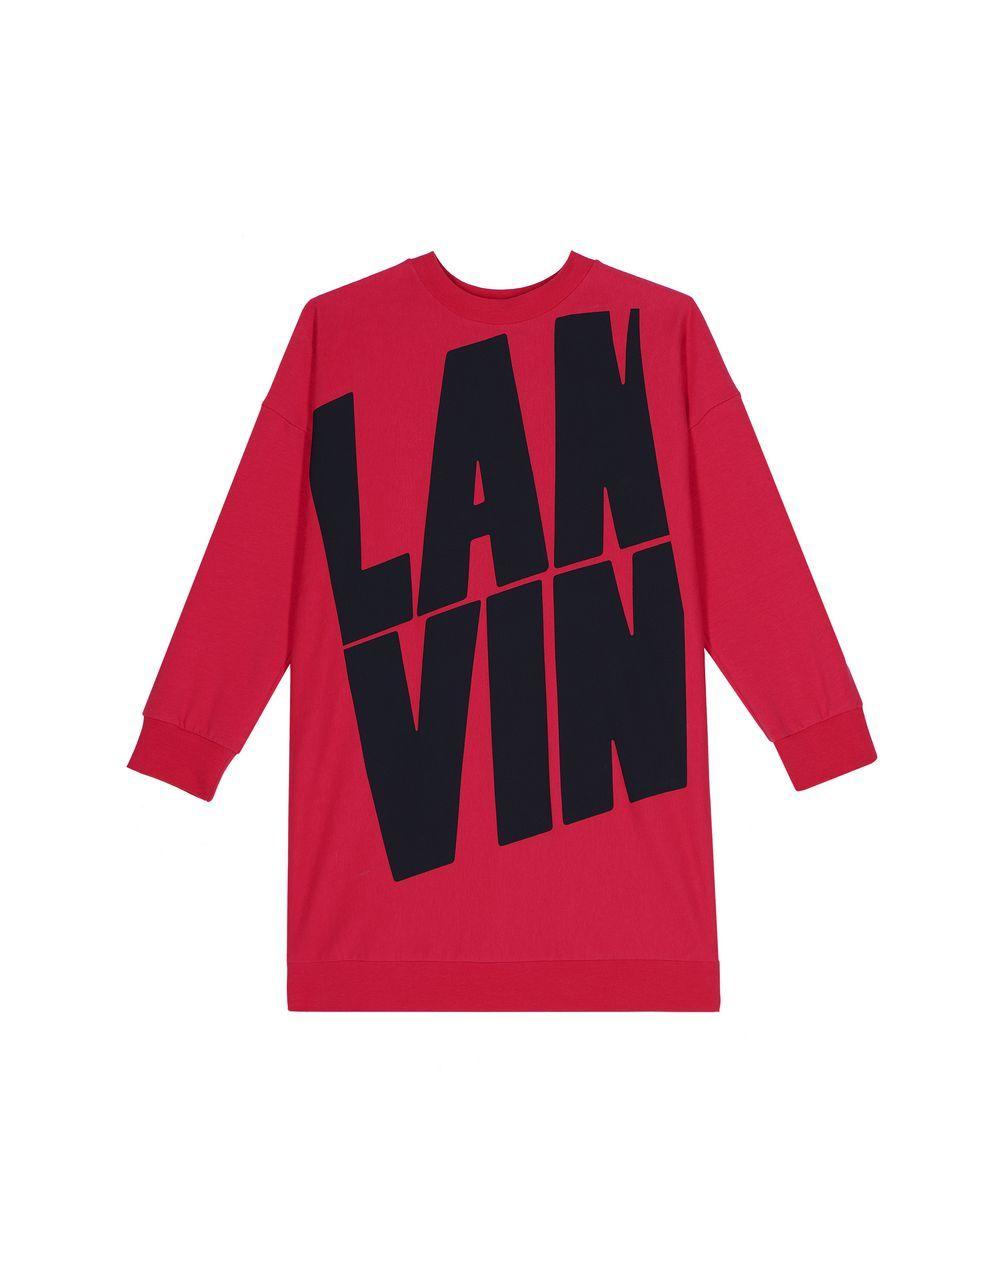 Lanvin Logo - Lanvin FUCHSIA LANVIN LOGO DRESS , Dress Childrenswear ...